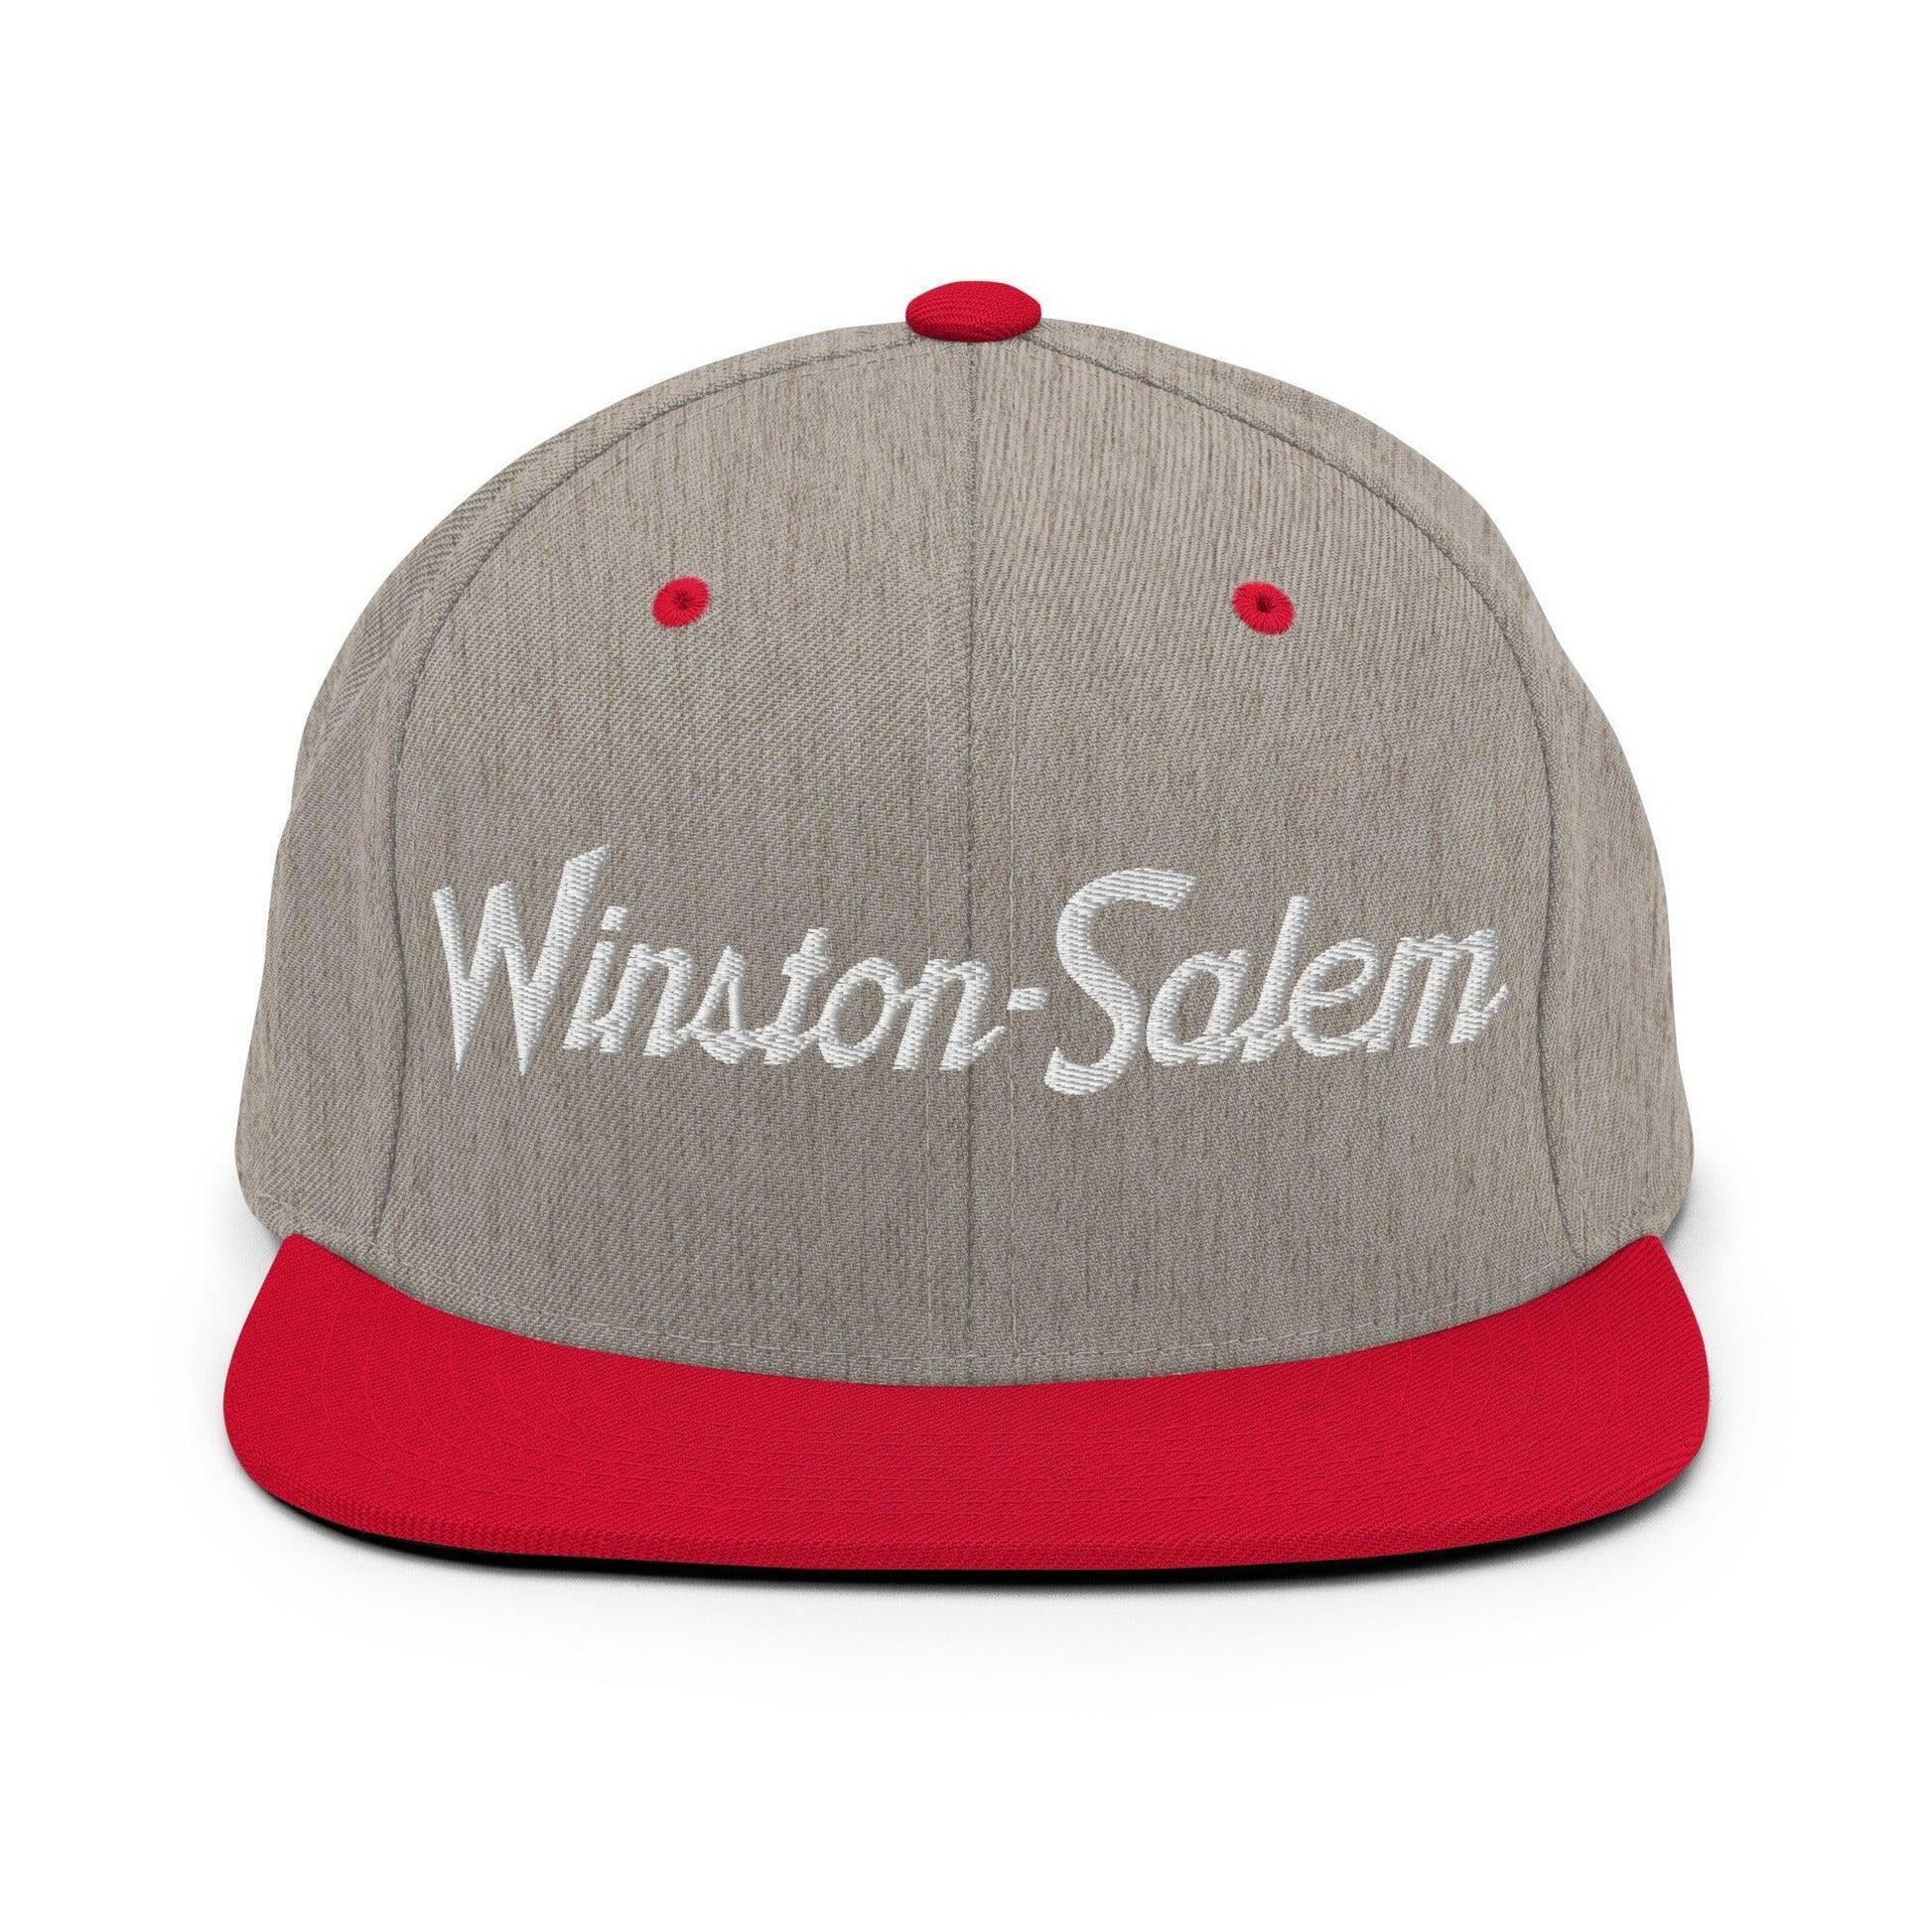 Winston-Salem Script Snapback Hat Heather Grey/ Red